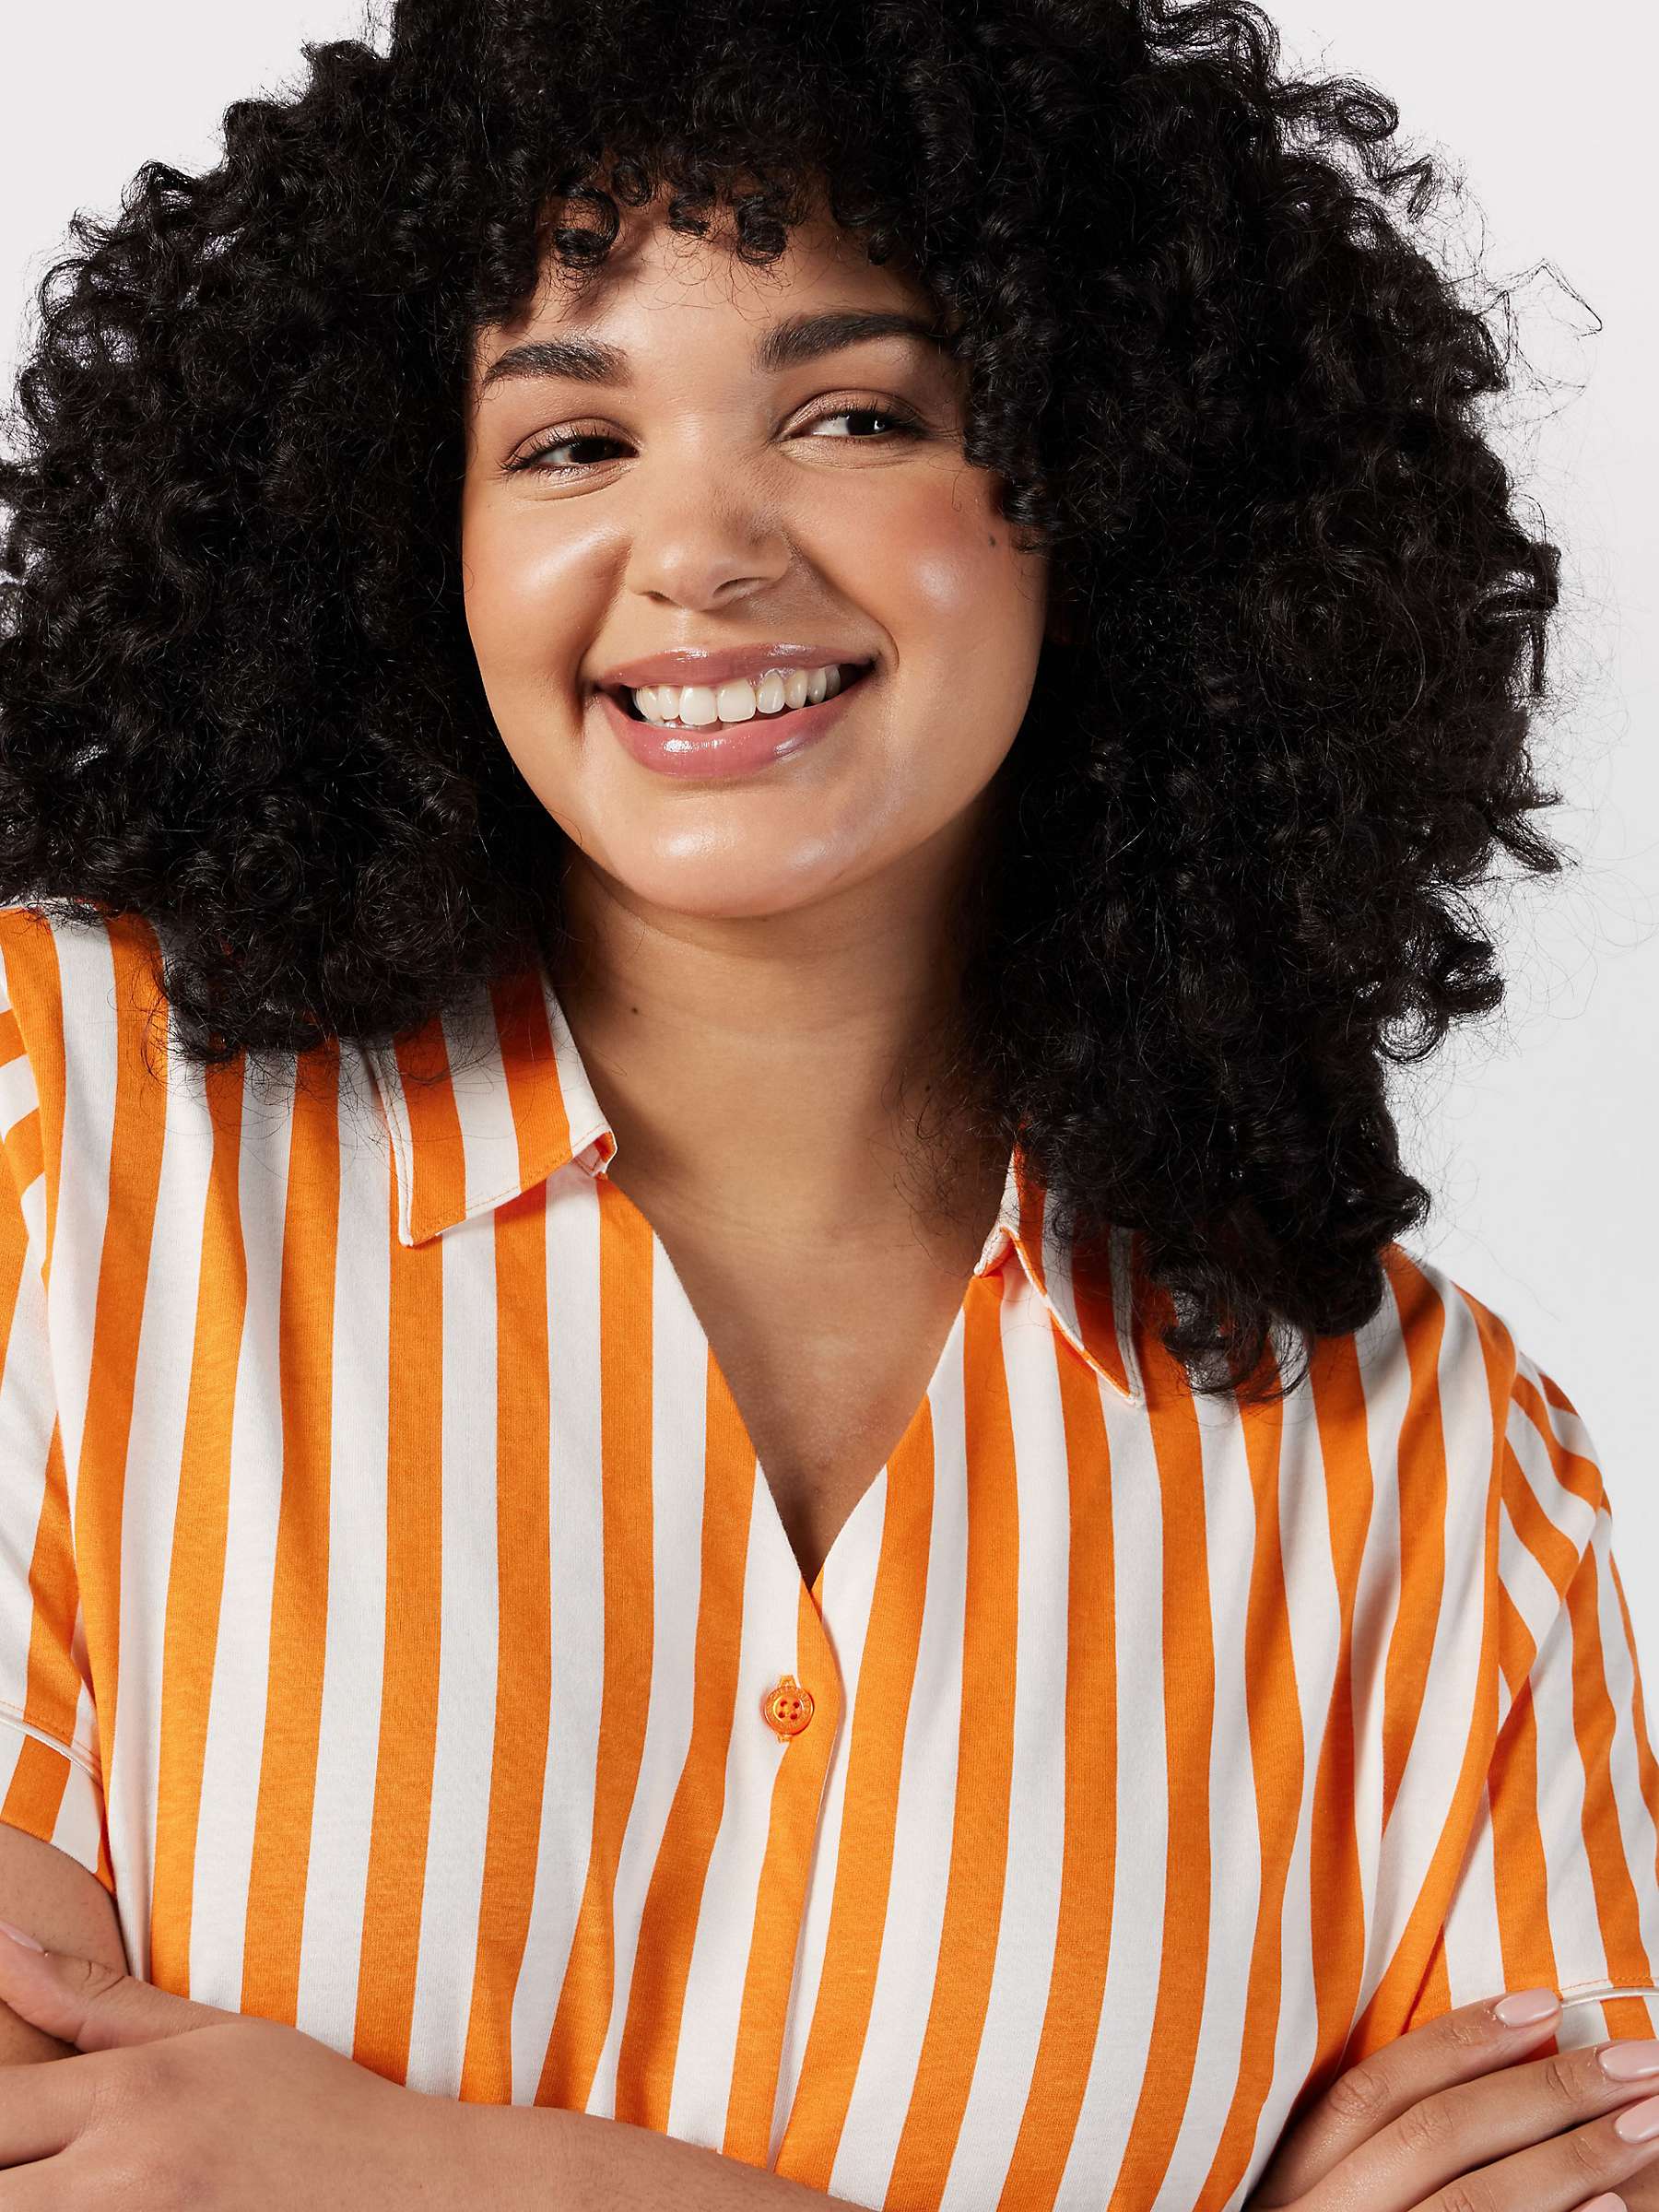 Buy Chelsea Peers Curve Organic Cotton Stripe Short Pyjama Set, Orange Online at johnlewis.com